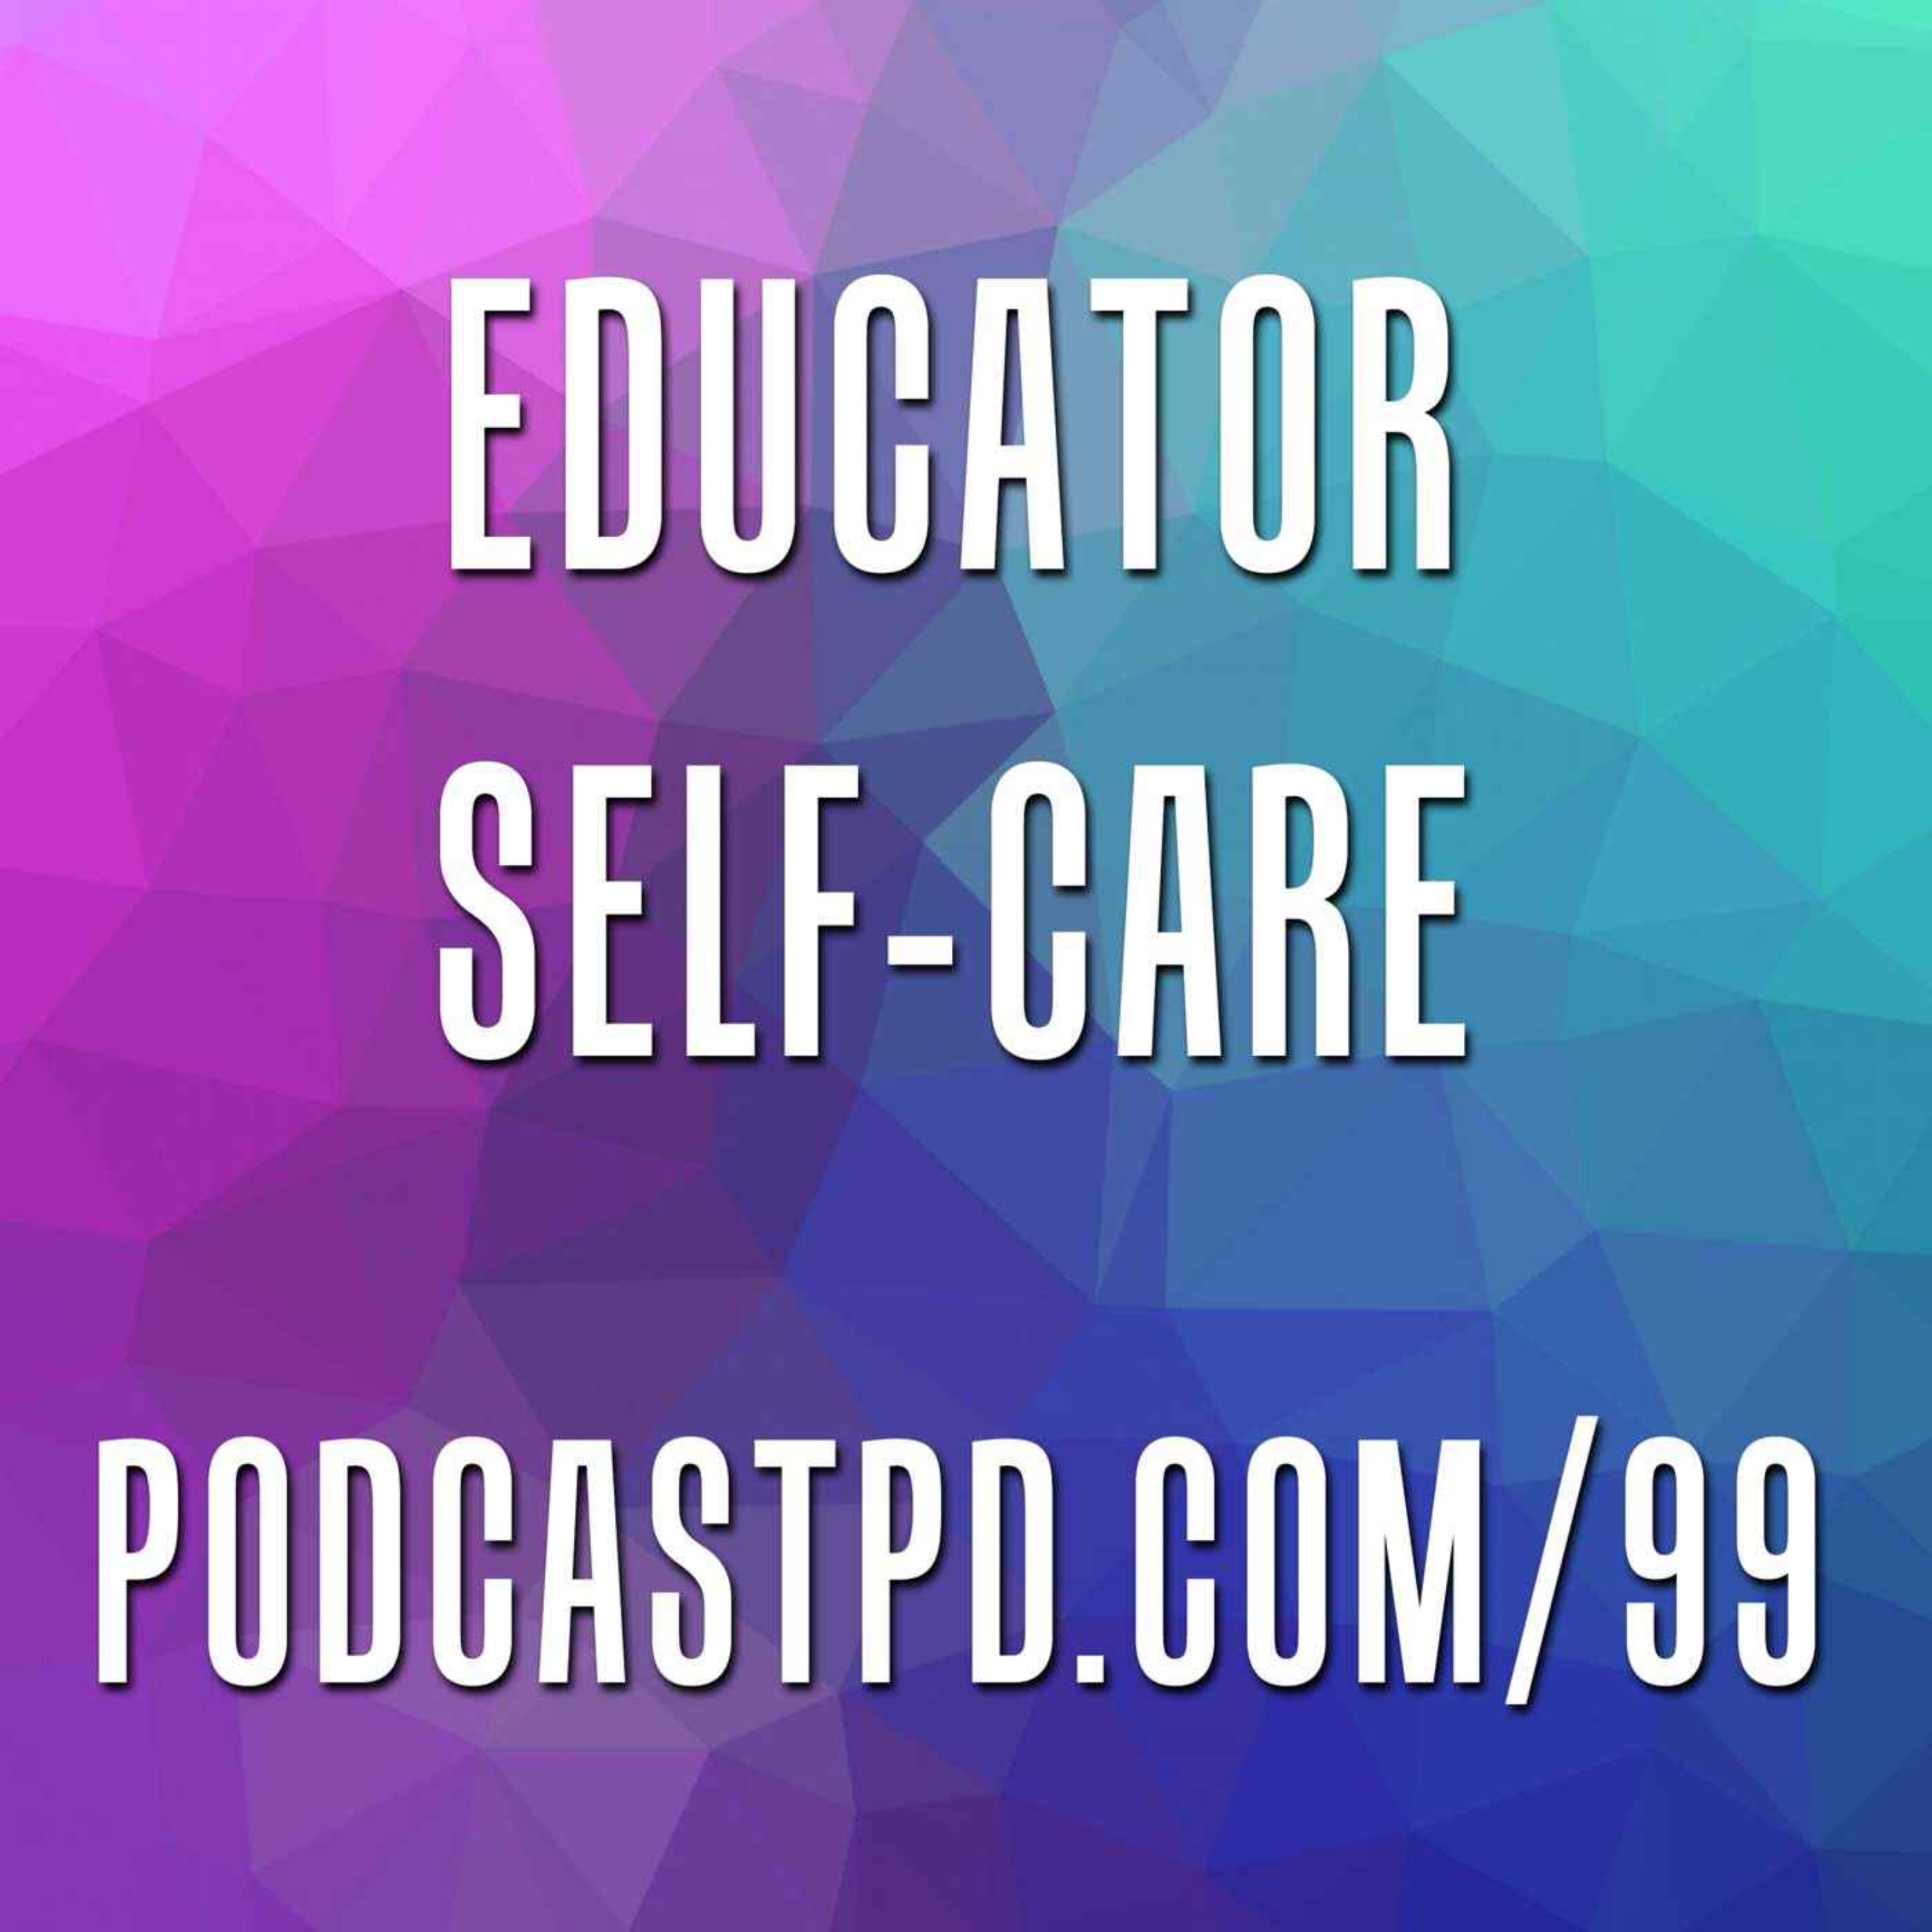 Educator Self-Care - PPD099 Image